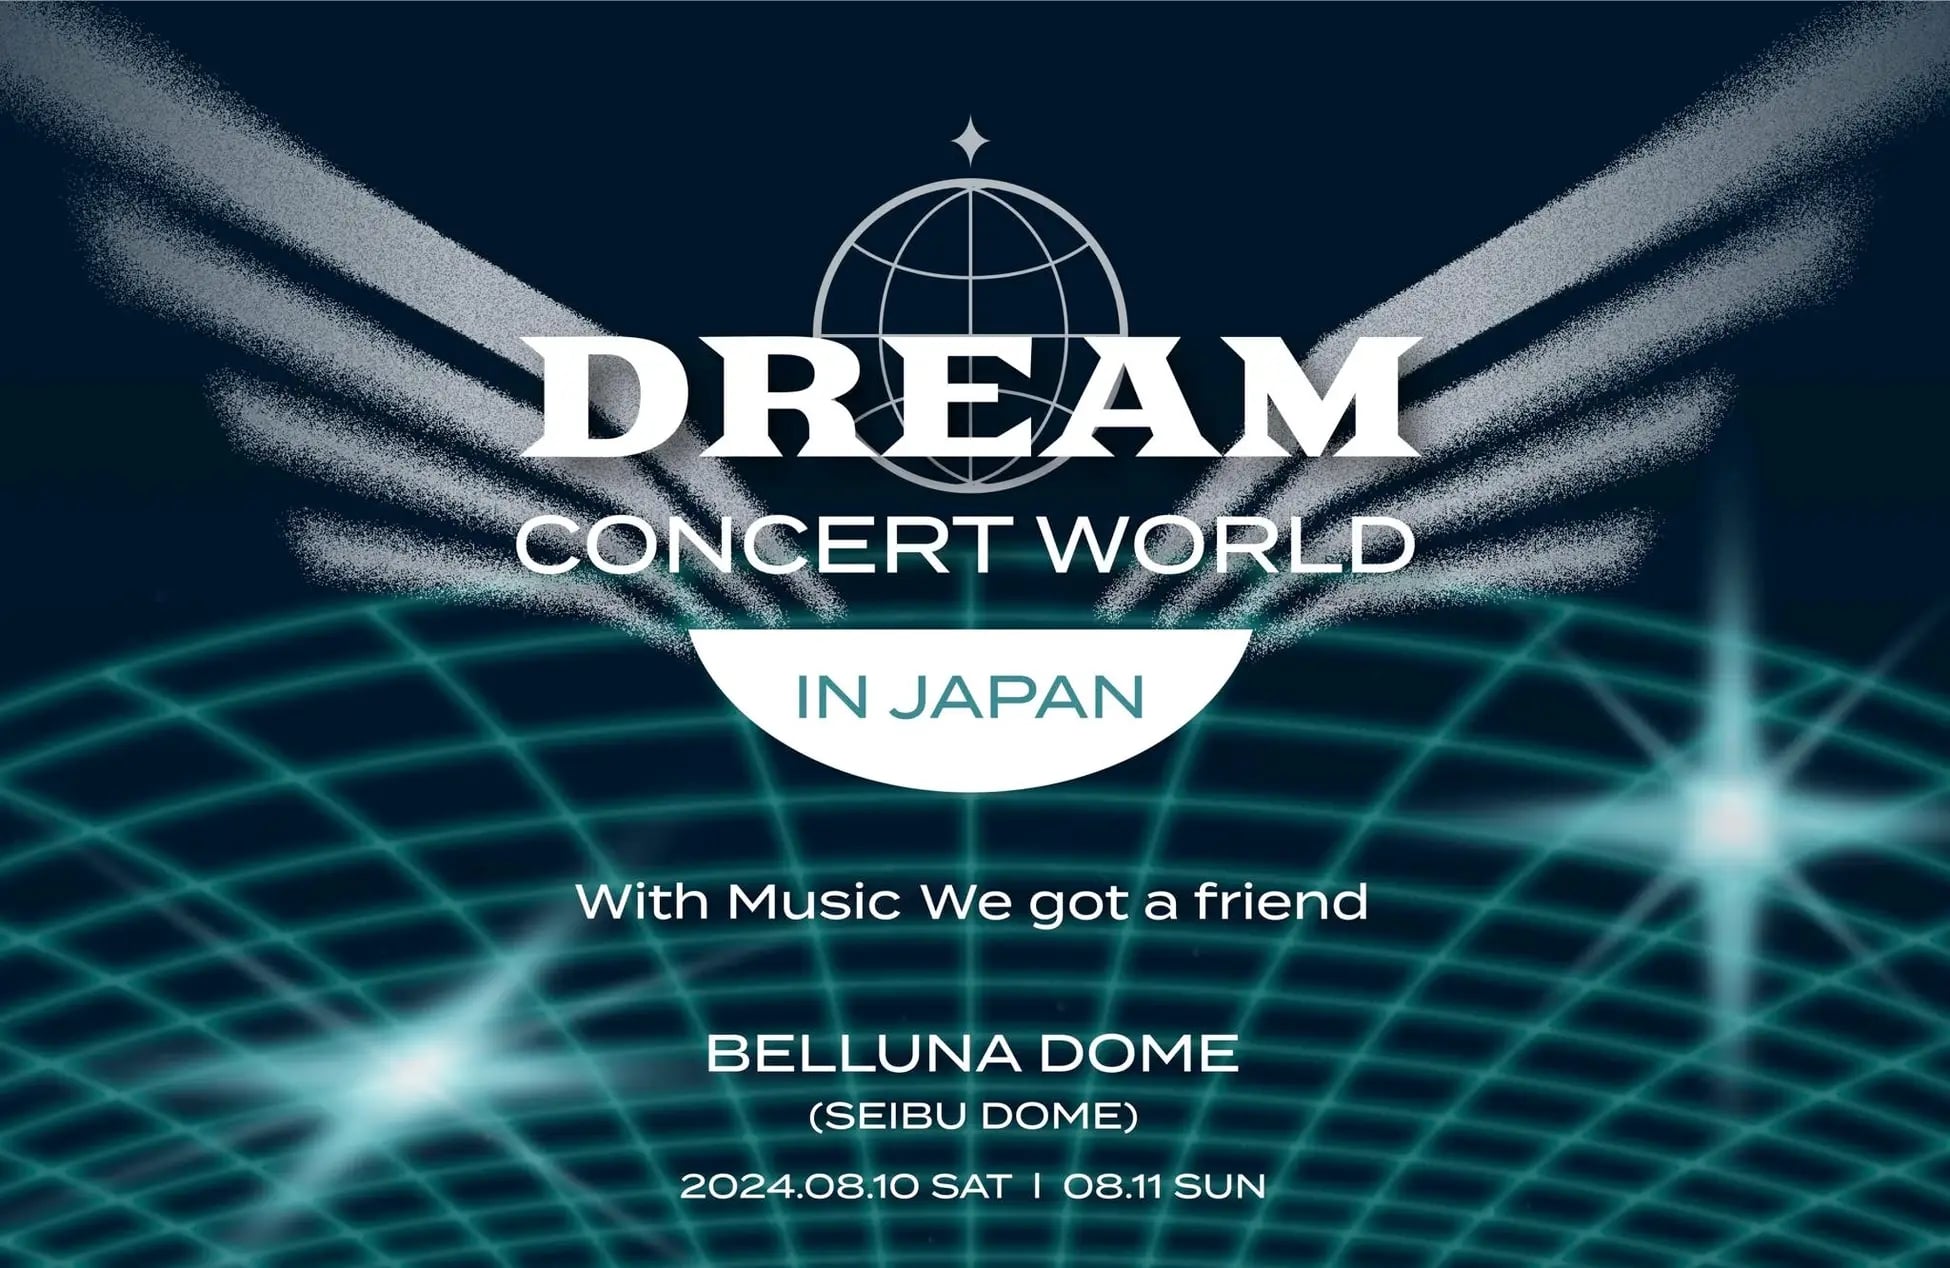 DREAM CONCERT WORLD IN JAPAN